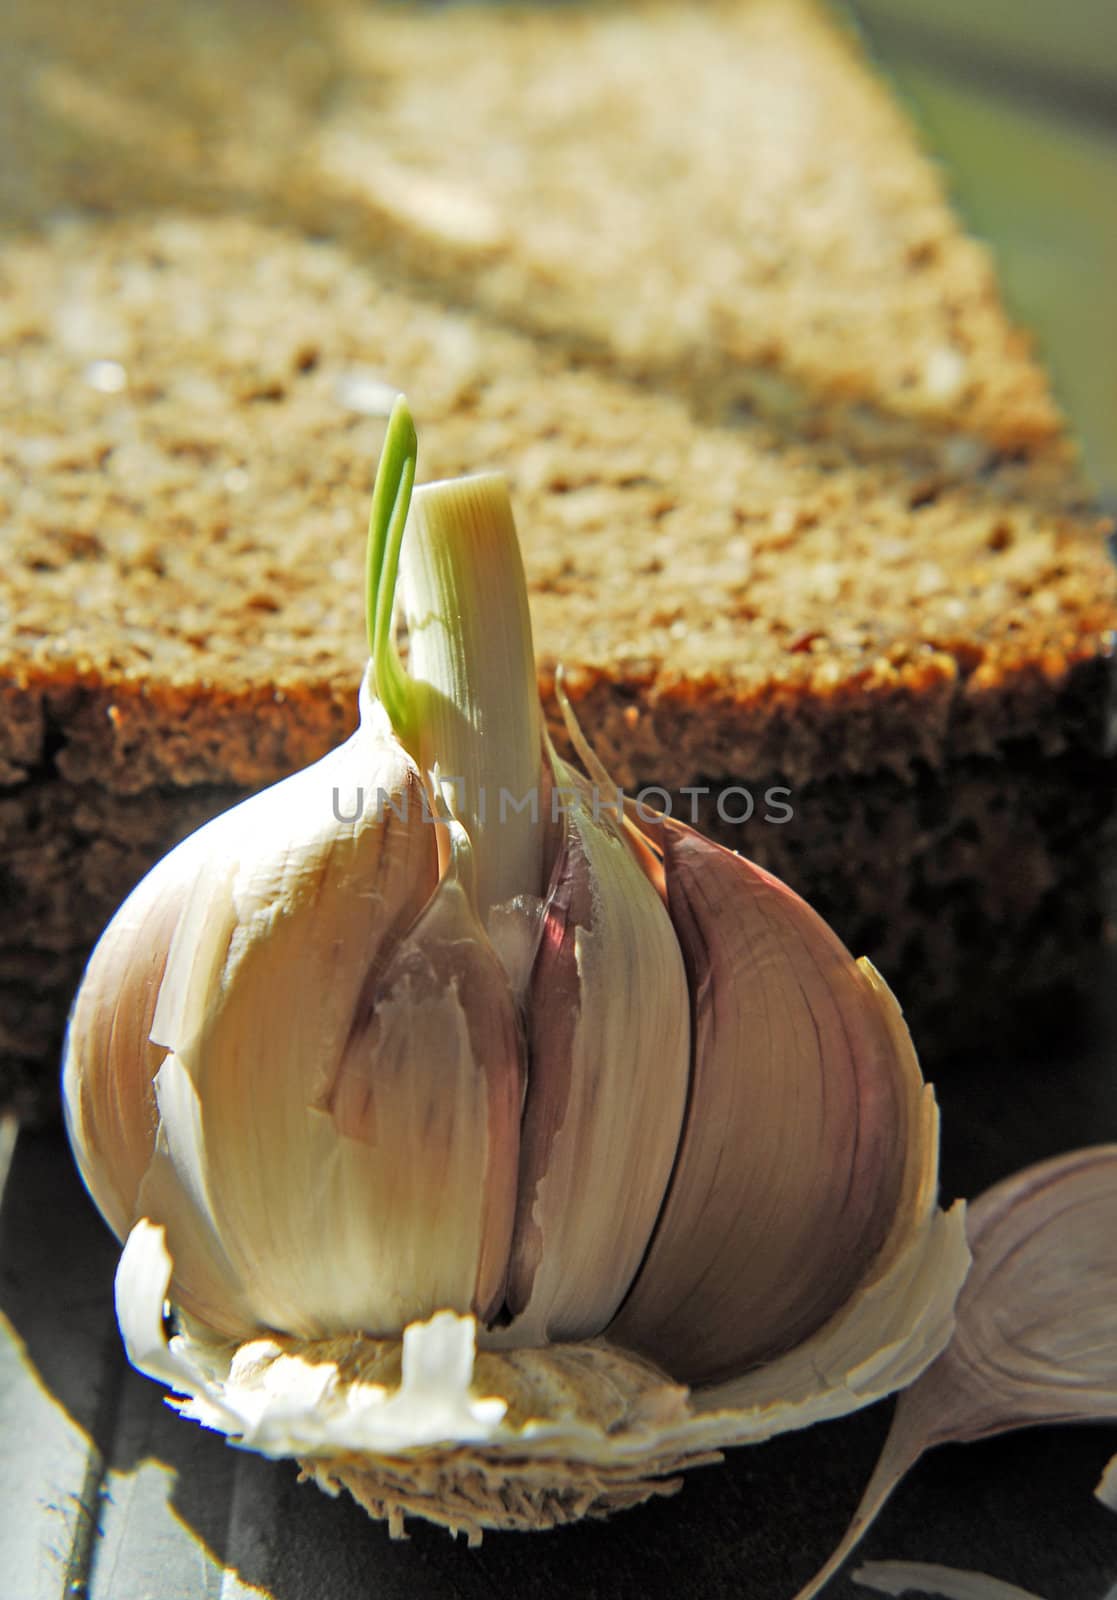 garlic and bread by severija